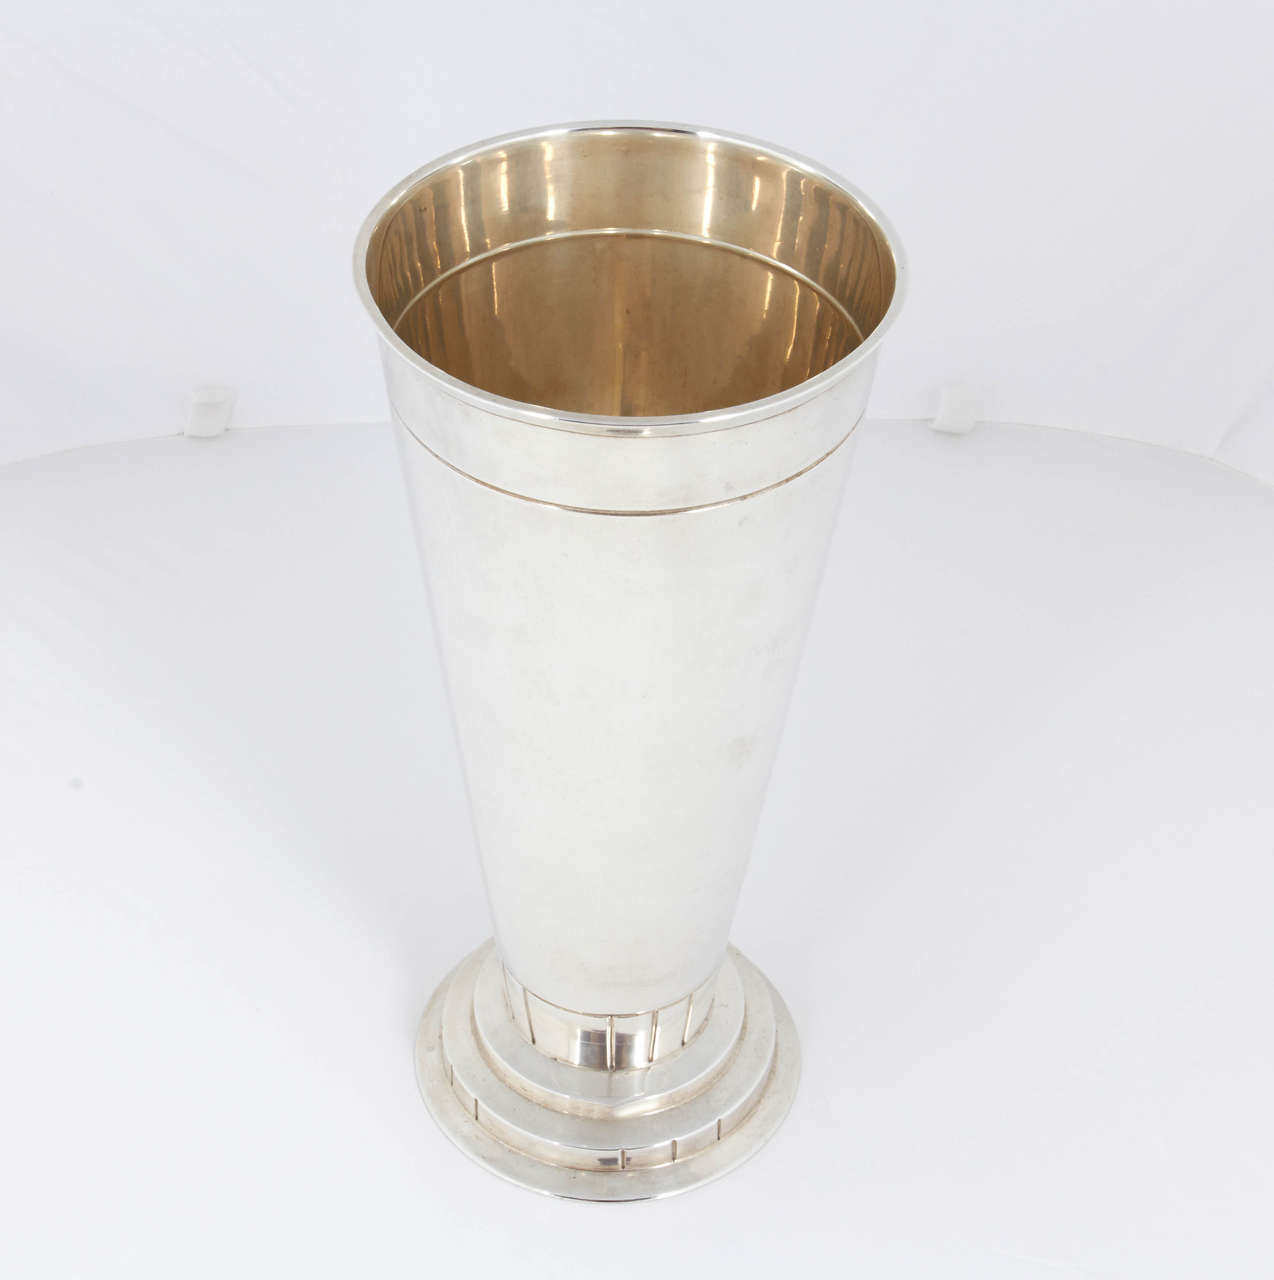 Gorham Modern American Sterling Silver Vase Prototype by Erik Magnussen 1